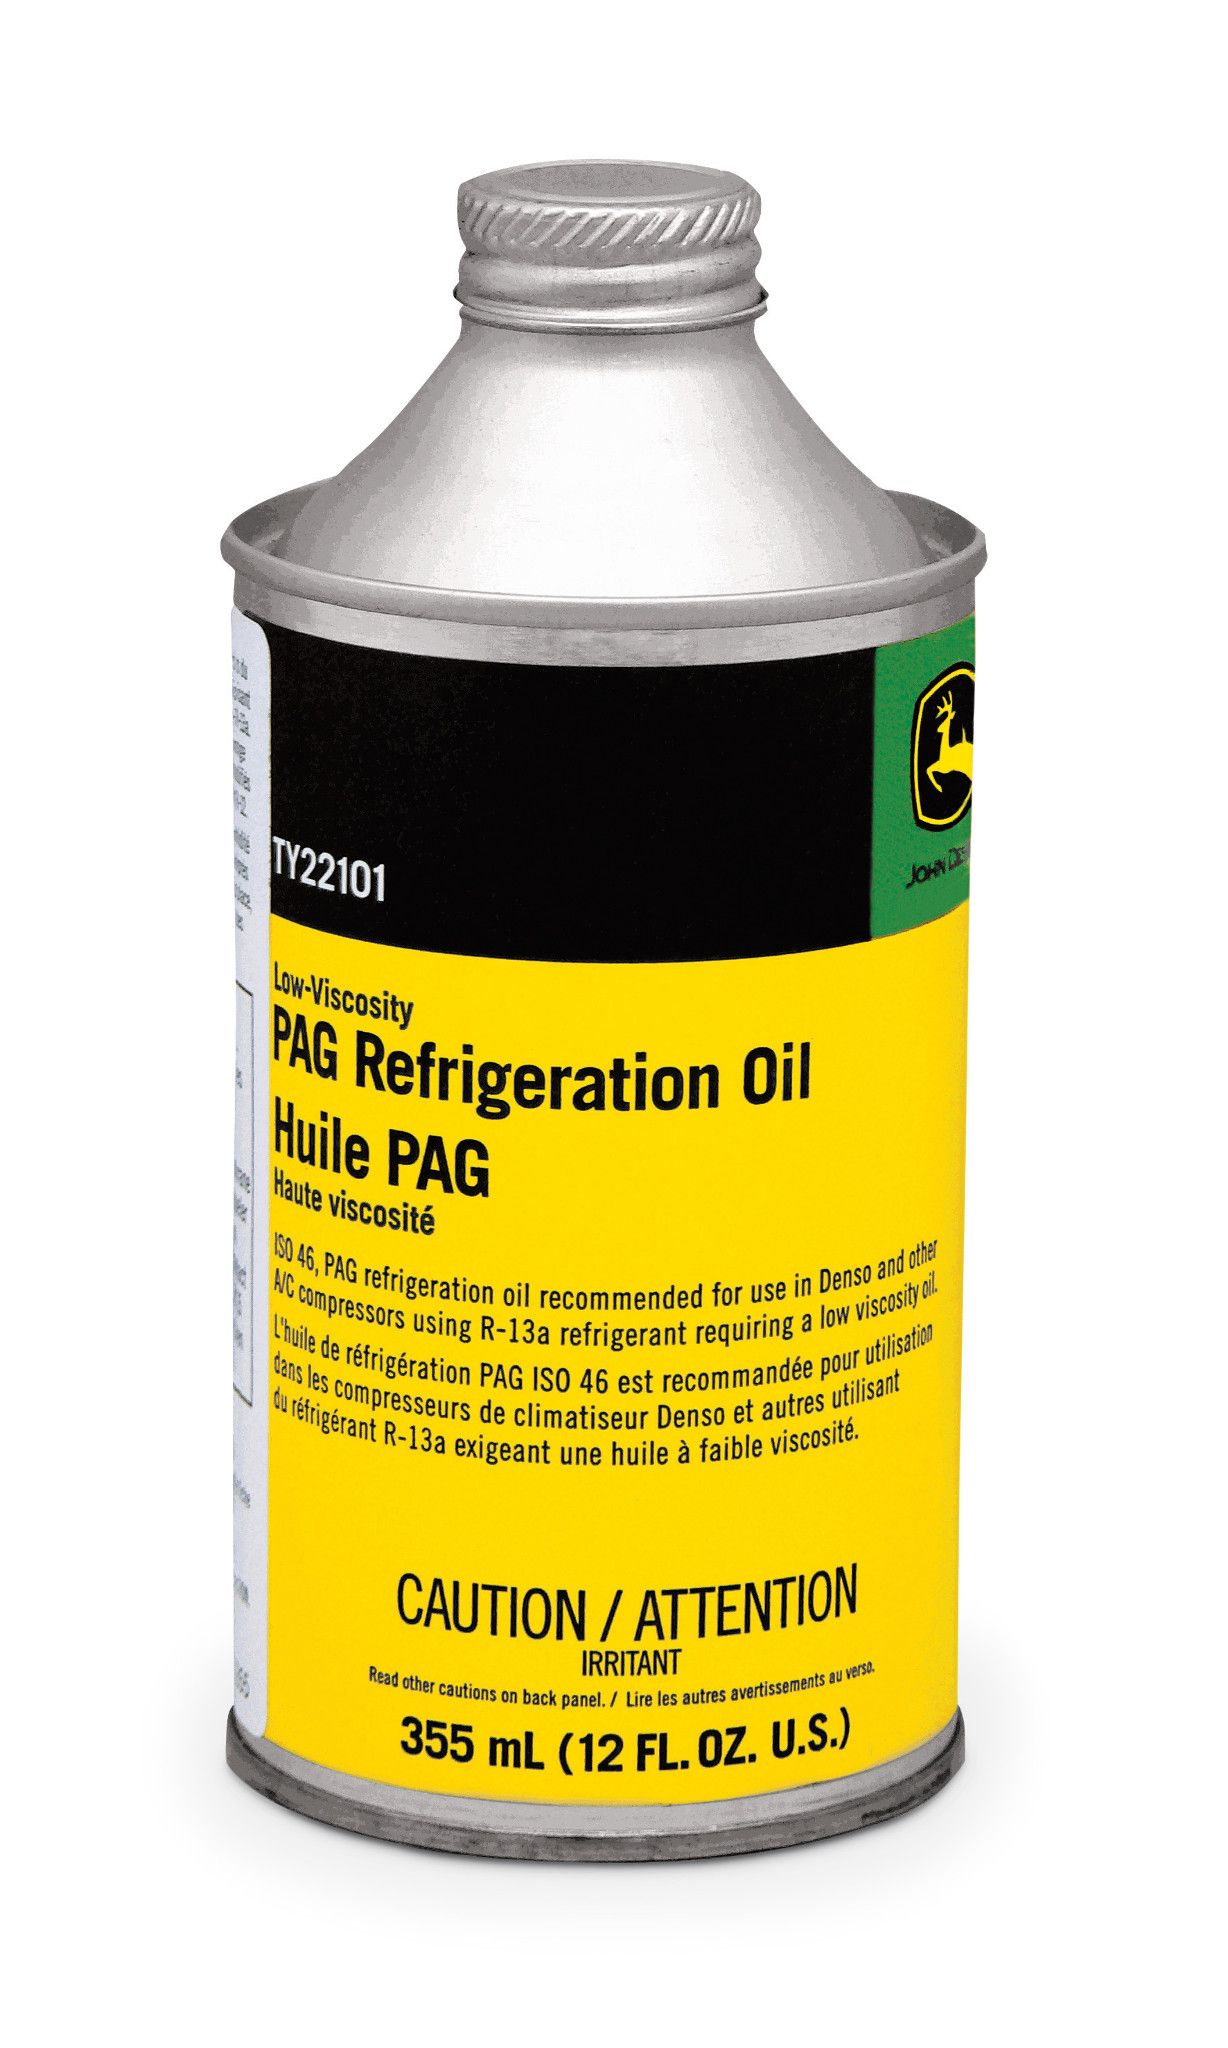 PAG Refrigeration Oil (Polyalkyline Glycol Oil) - TY22101